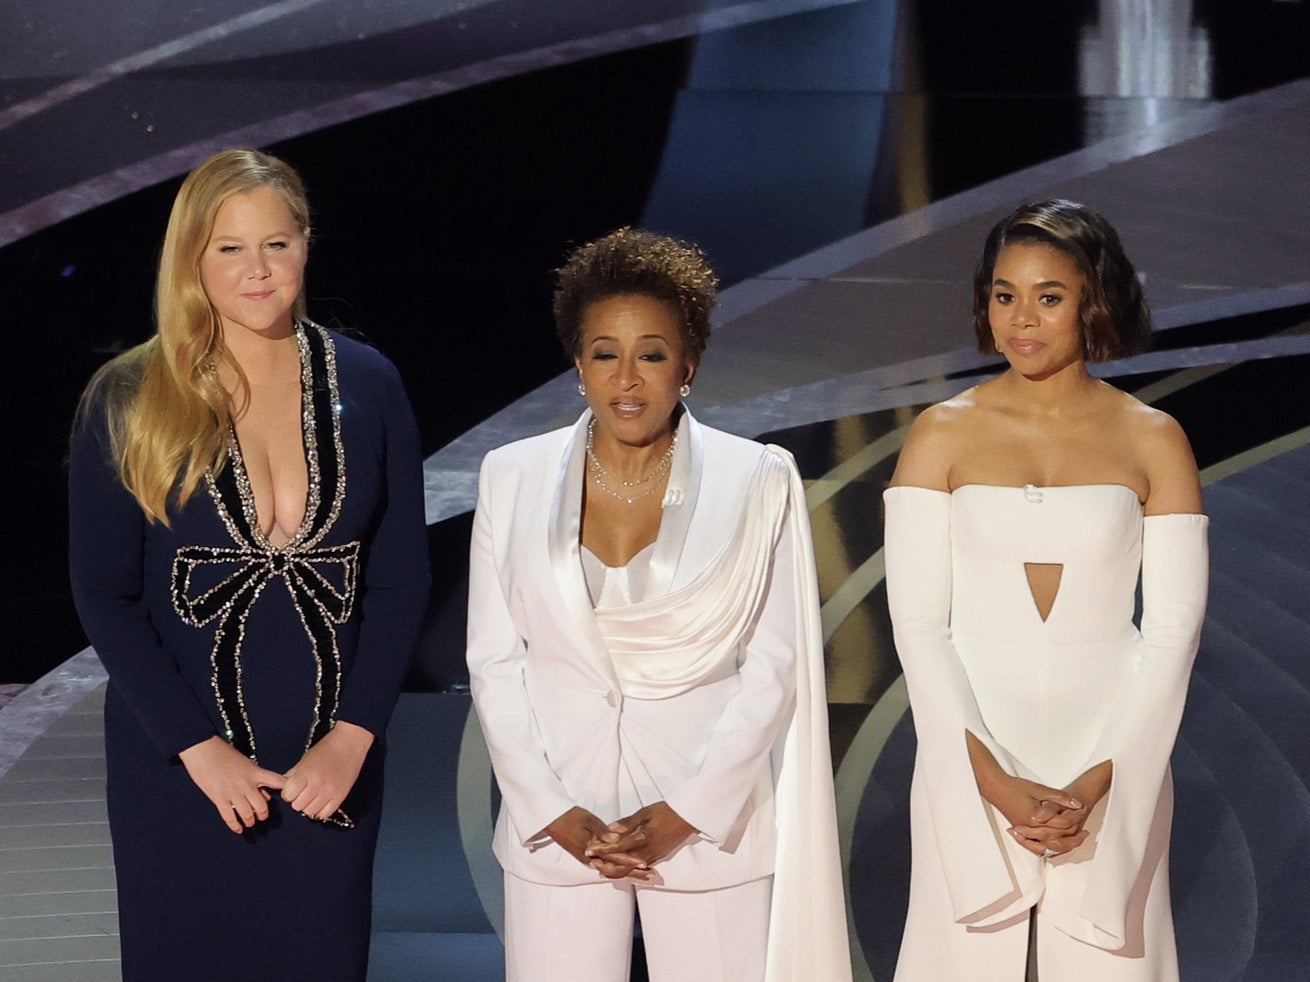 Amy Schumer hosted the Oscars alongside Wanda Sykes and Regina Hall